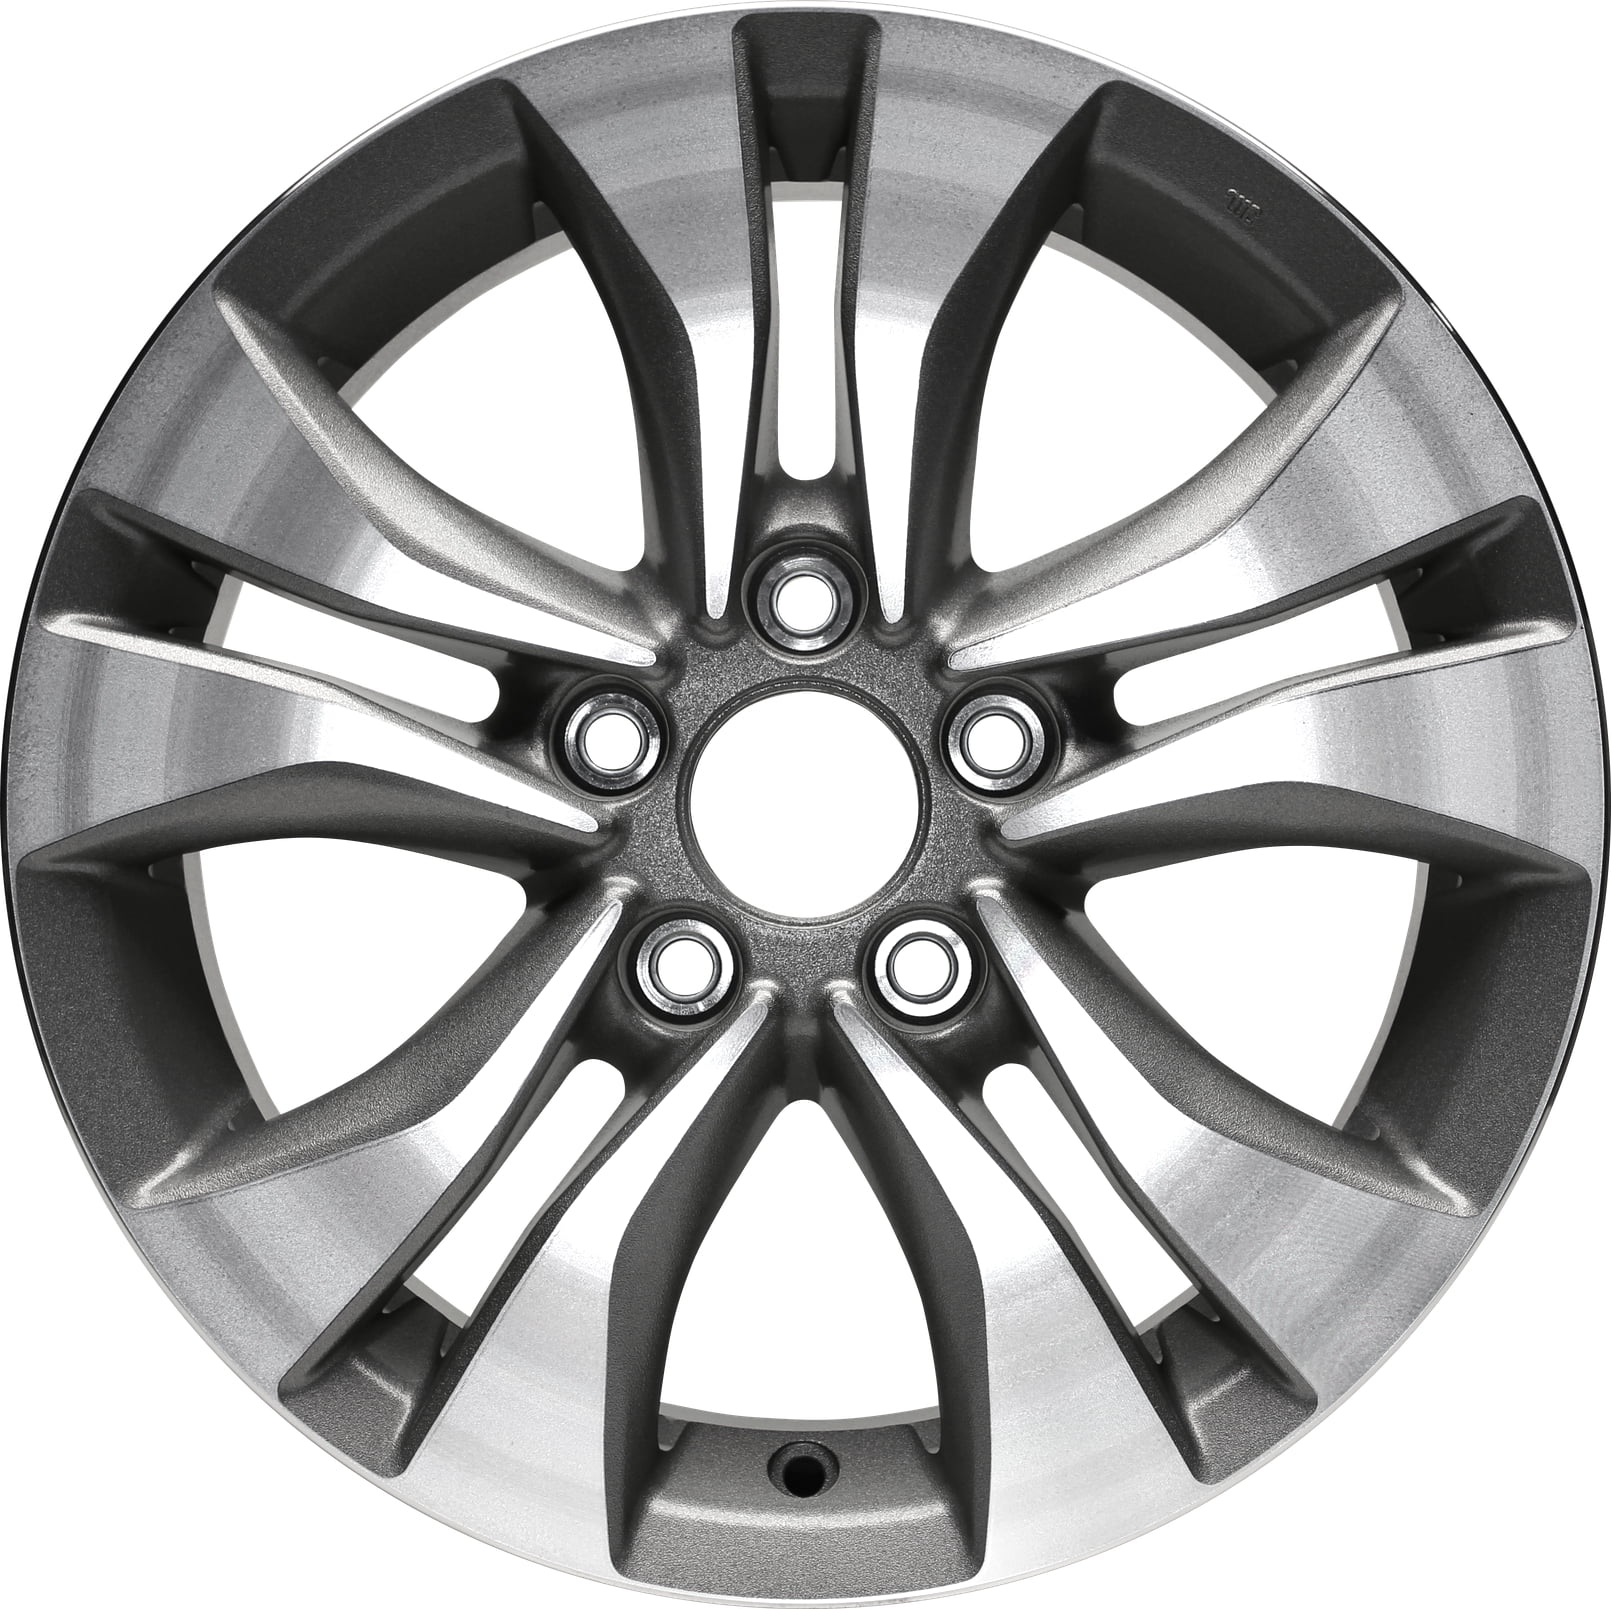 Precision 16 x Slim Fit Tuner Alloy Wheel Nuts for Ƭoyota Corolla Compact PN.SFP-16NM10TK+SKEY178